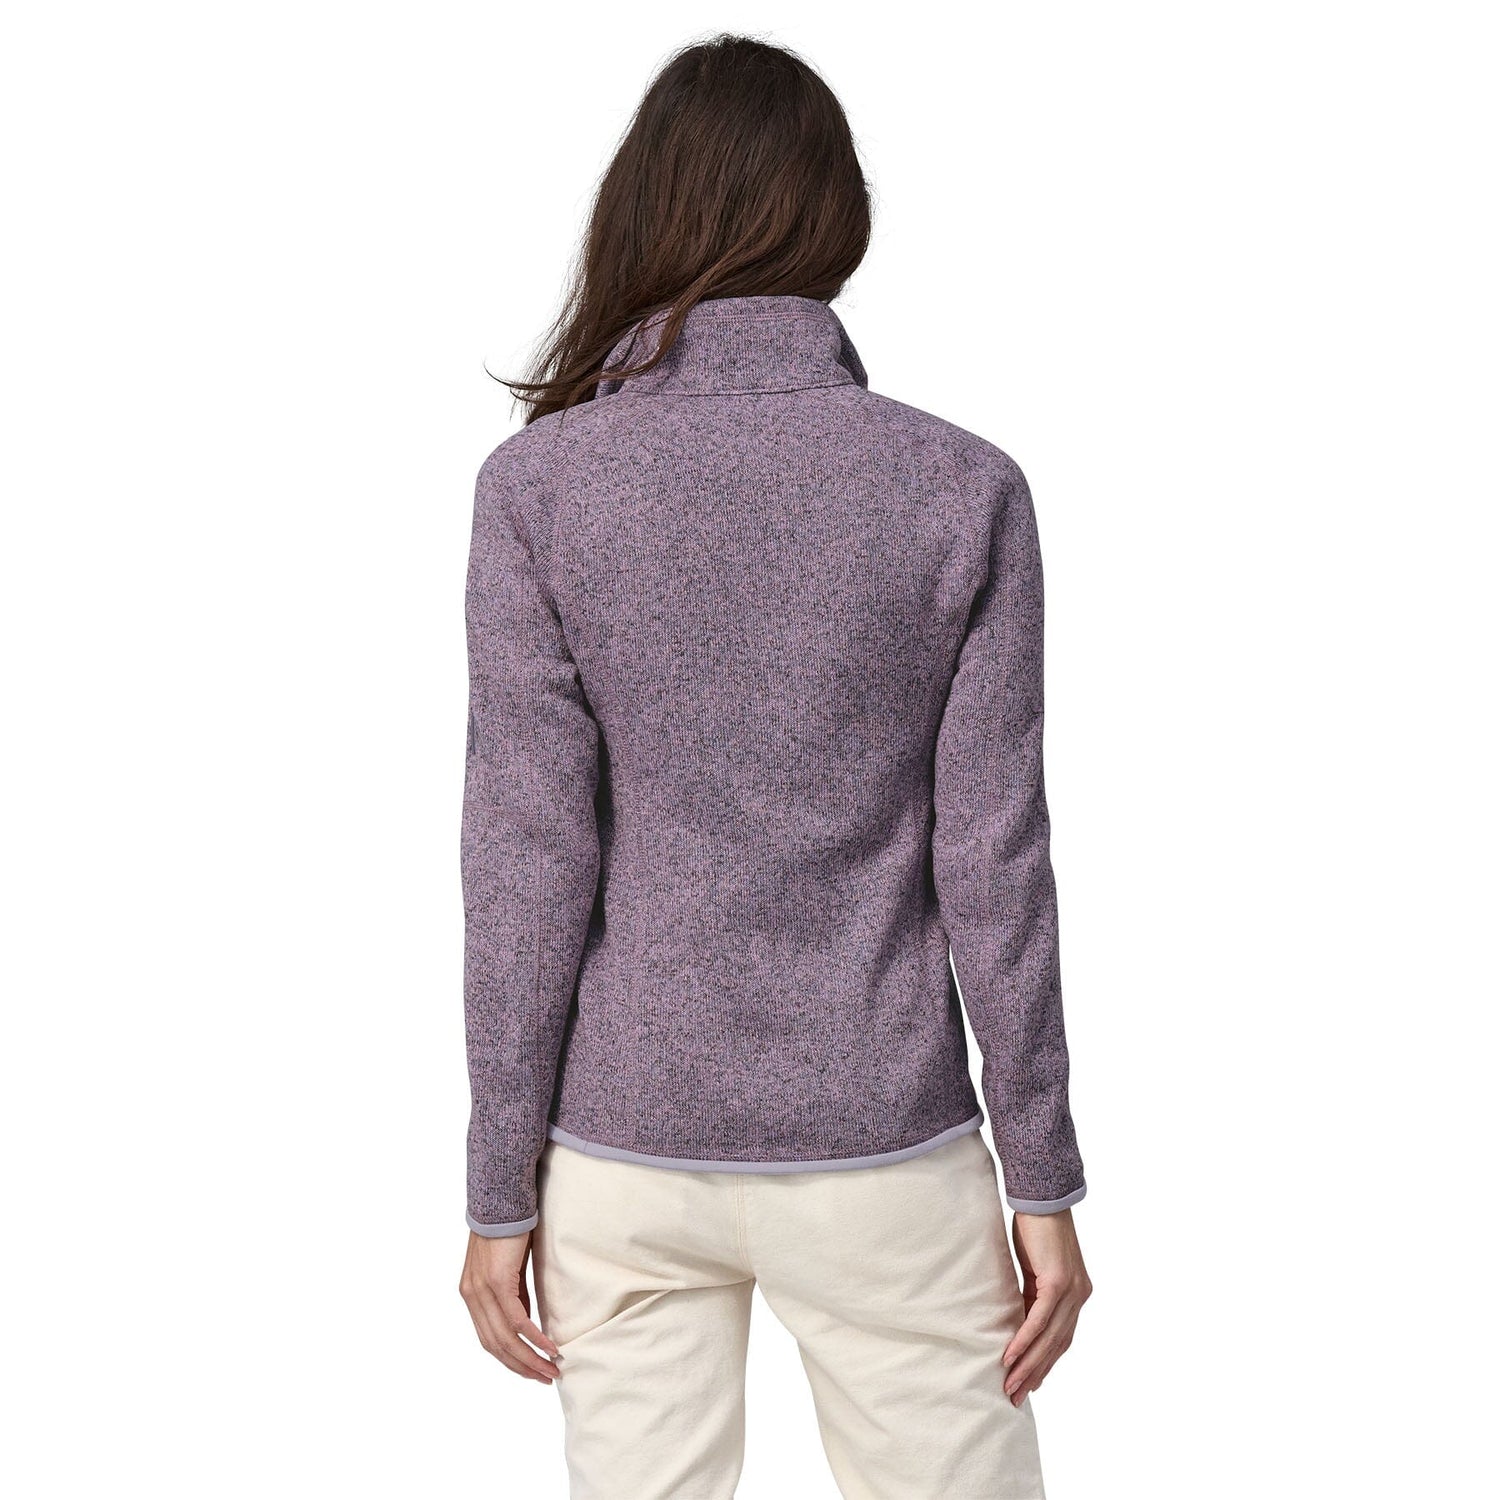 Patagonia W's Better Sweater 1/4 Zip Fleece - Recycled polyester Milkweed Mauve Shirt